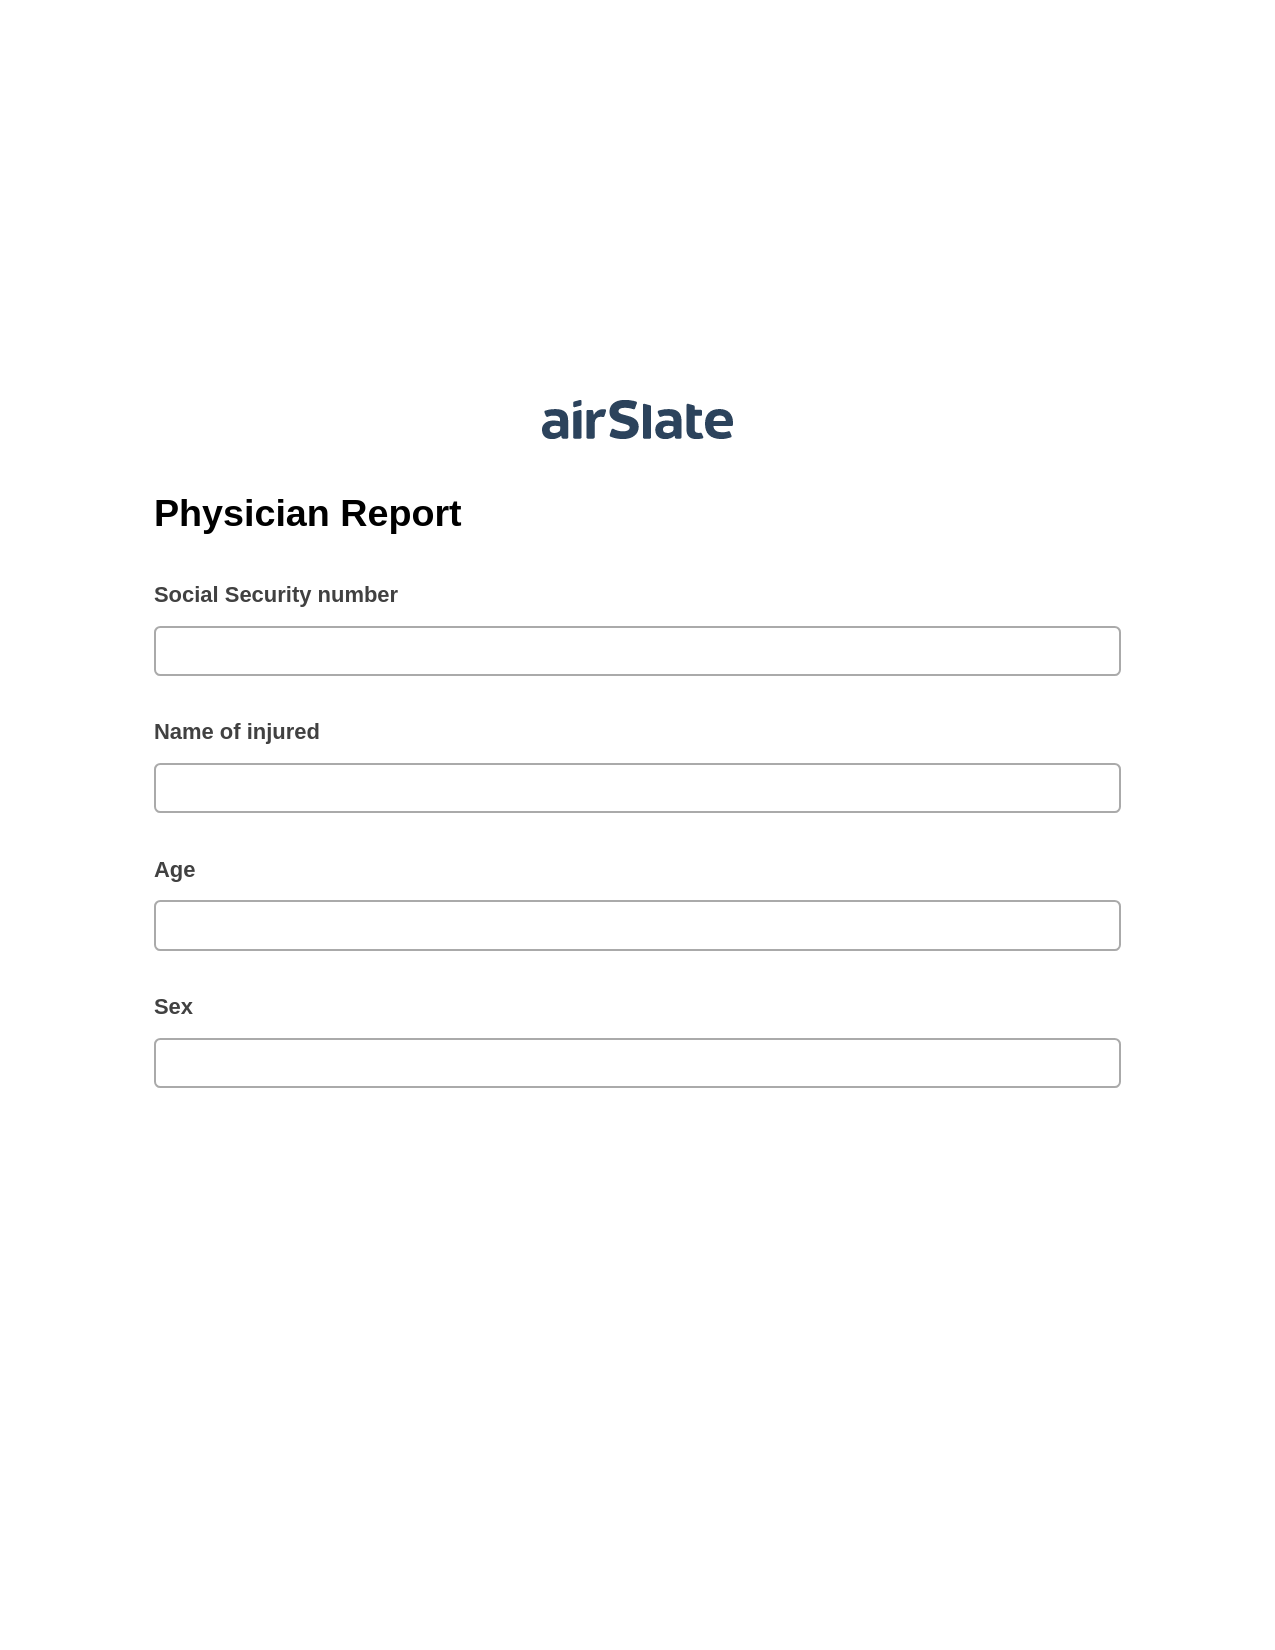 Multirole Physician Report Pre-fill from Google Sheets Bot, Create NetSuite Record bot, Slack Notification Postfinish Bot